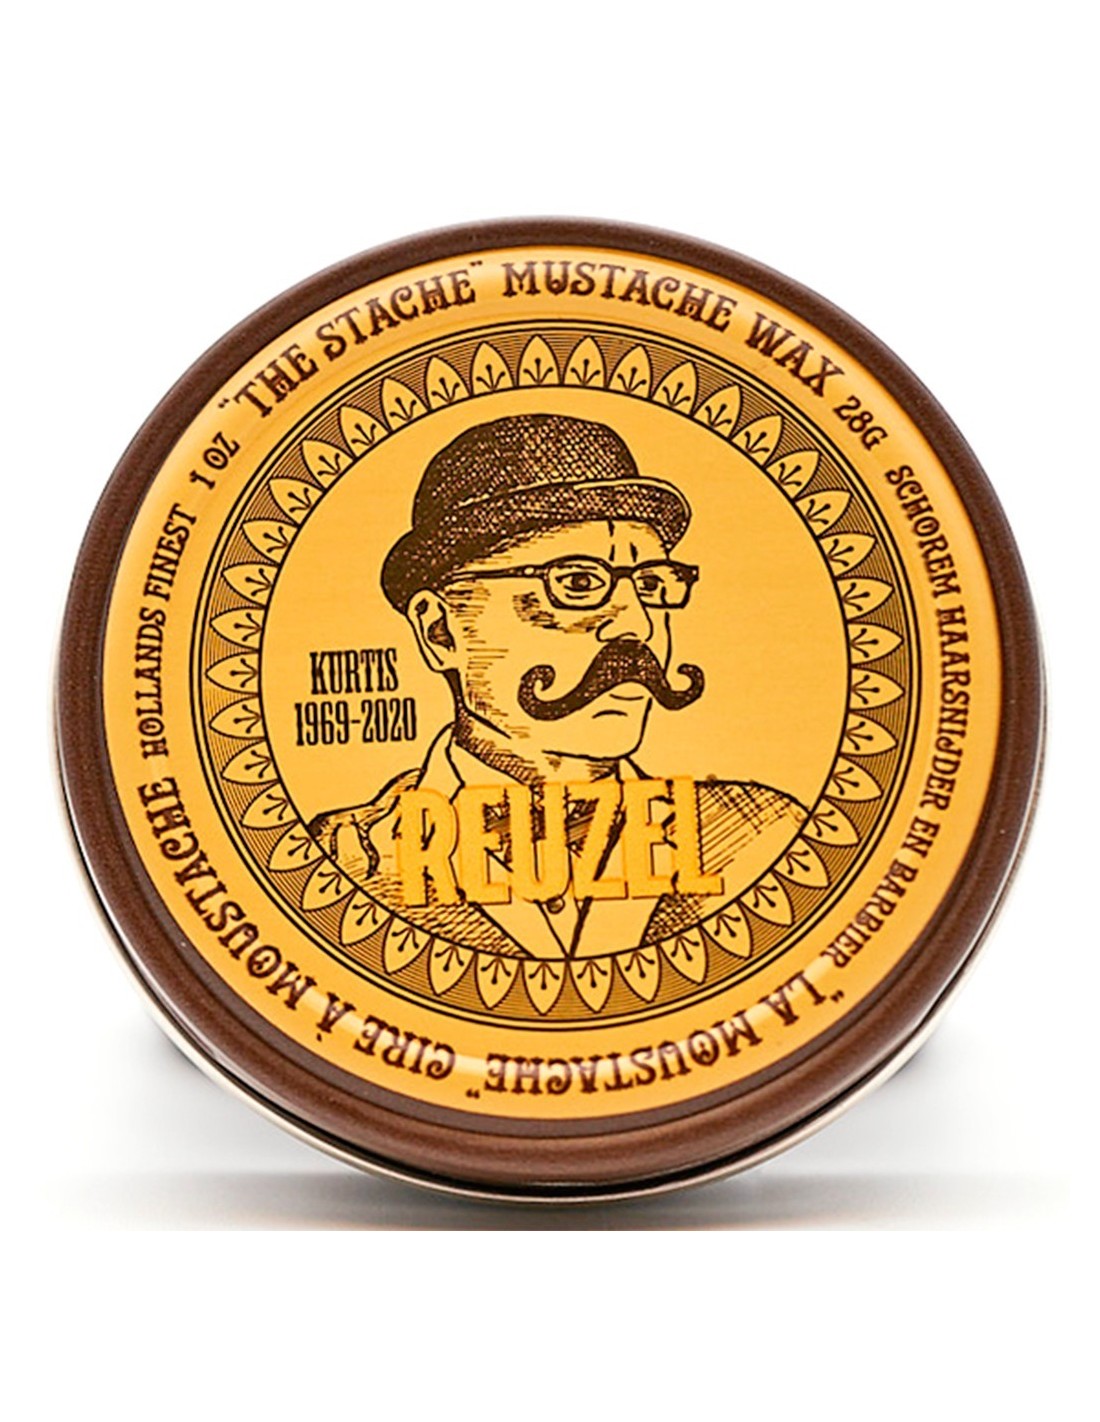 Reuzel Mustache Wax Bourbon 28ml. for Mustache treatment